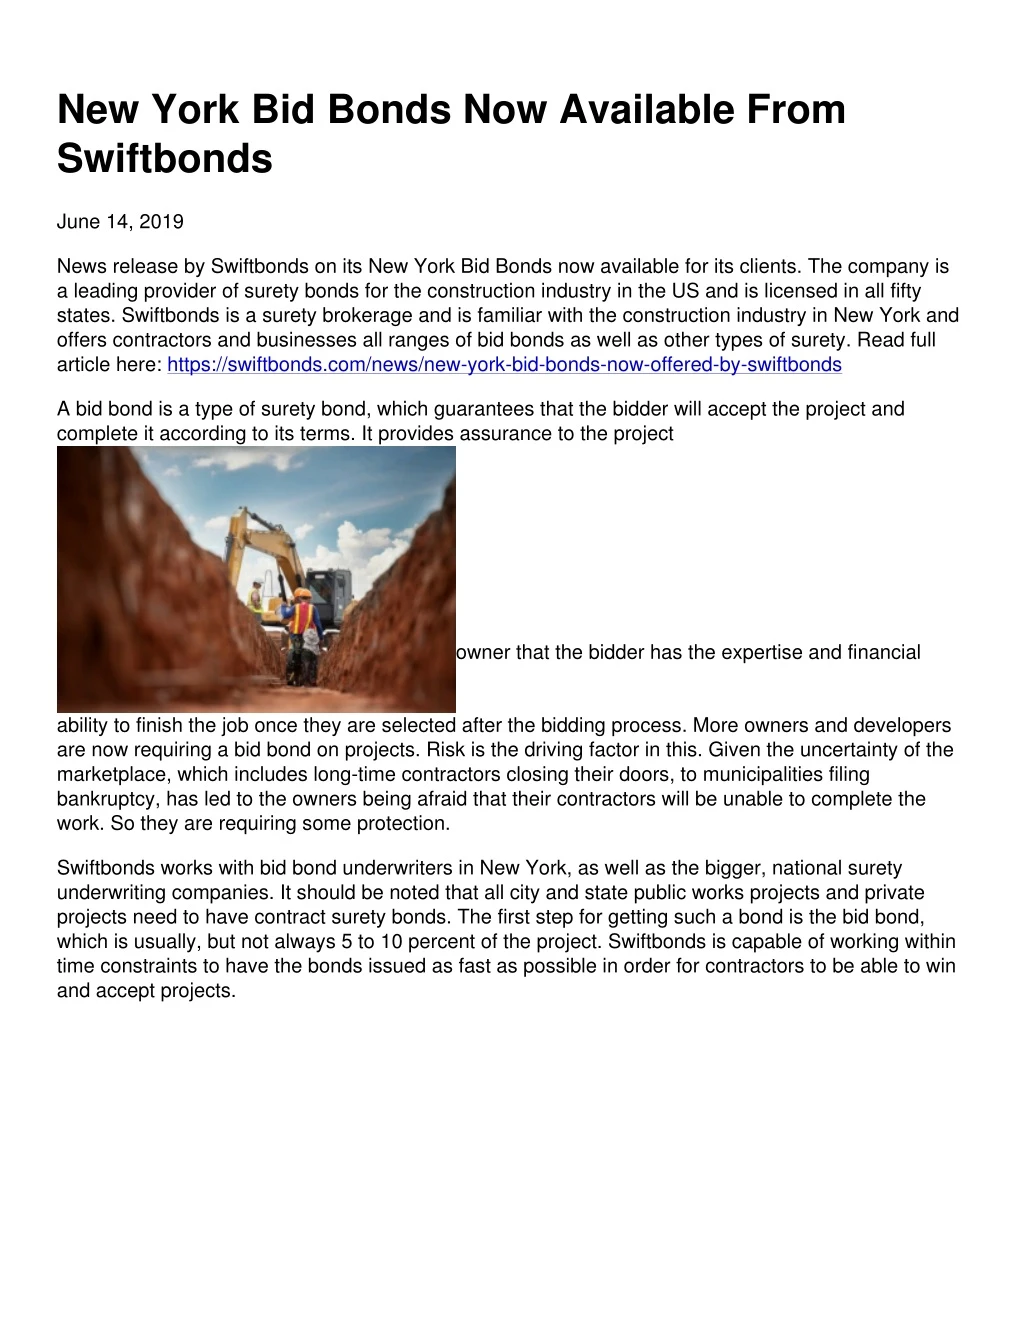 new york bid bonds now available from swiftbonds